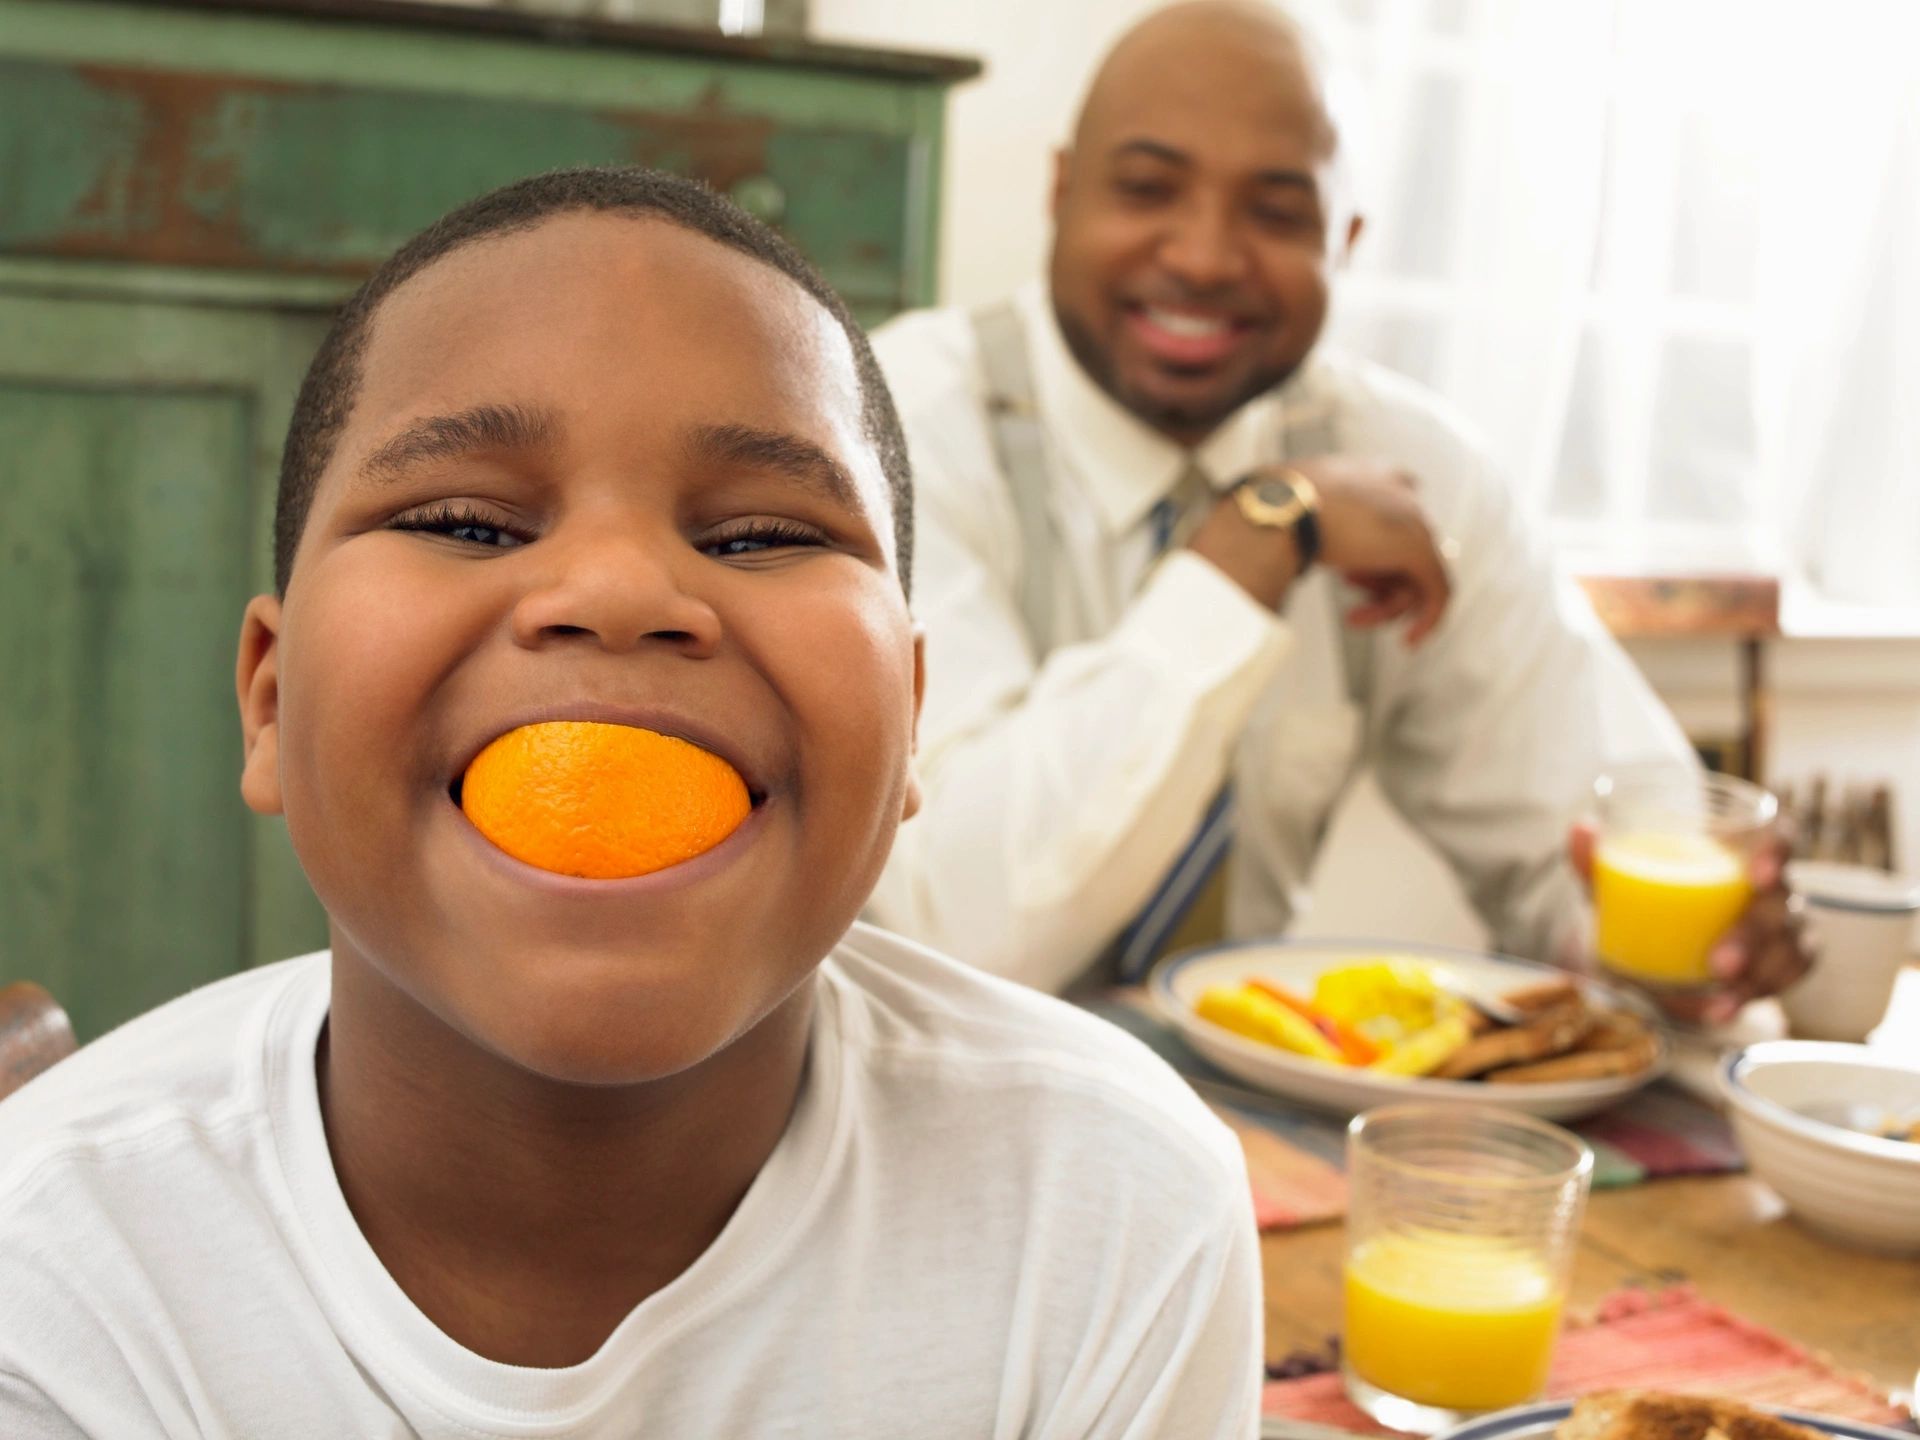 Boy with orange peel for smile